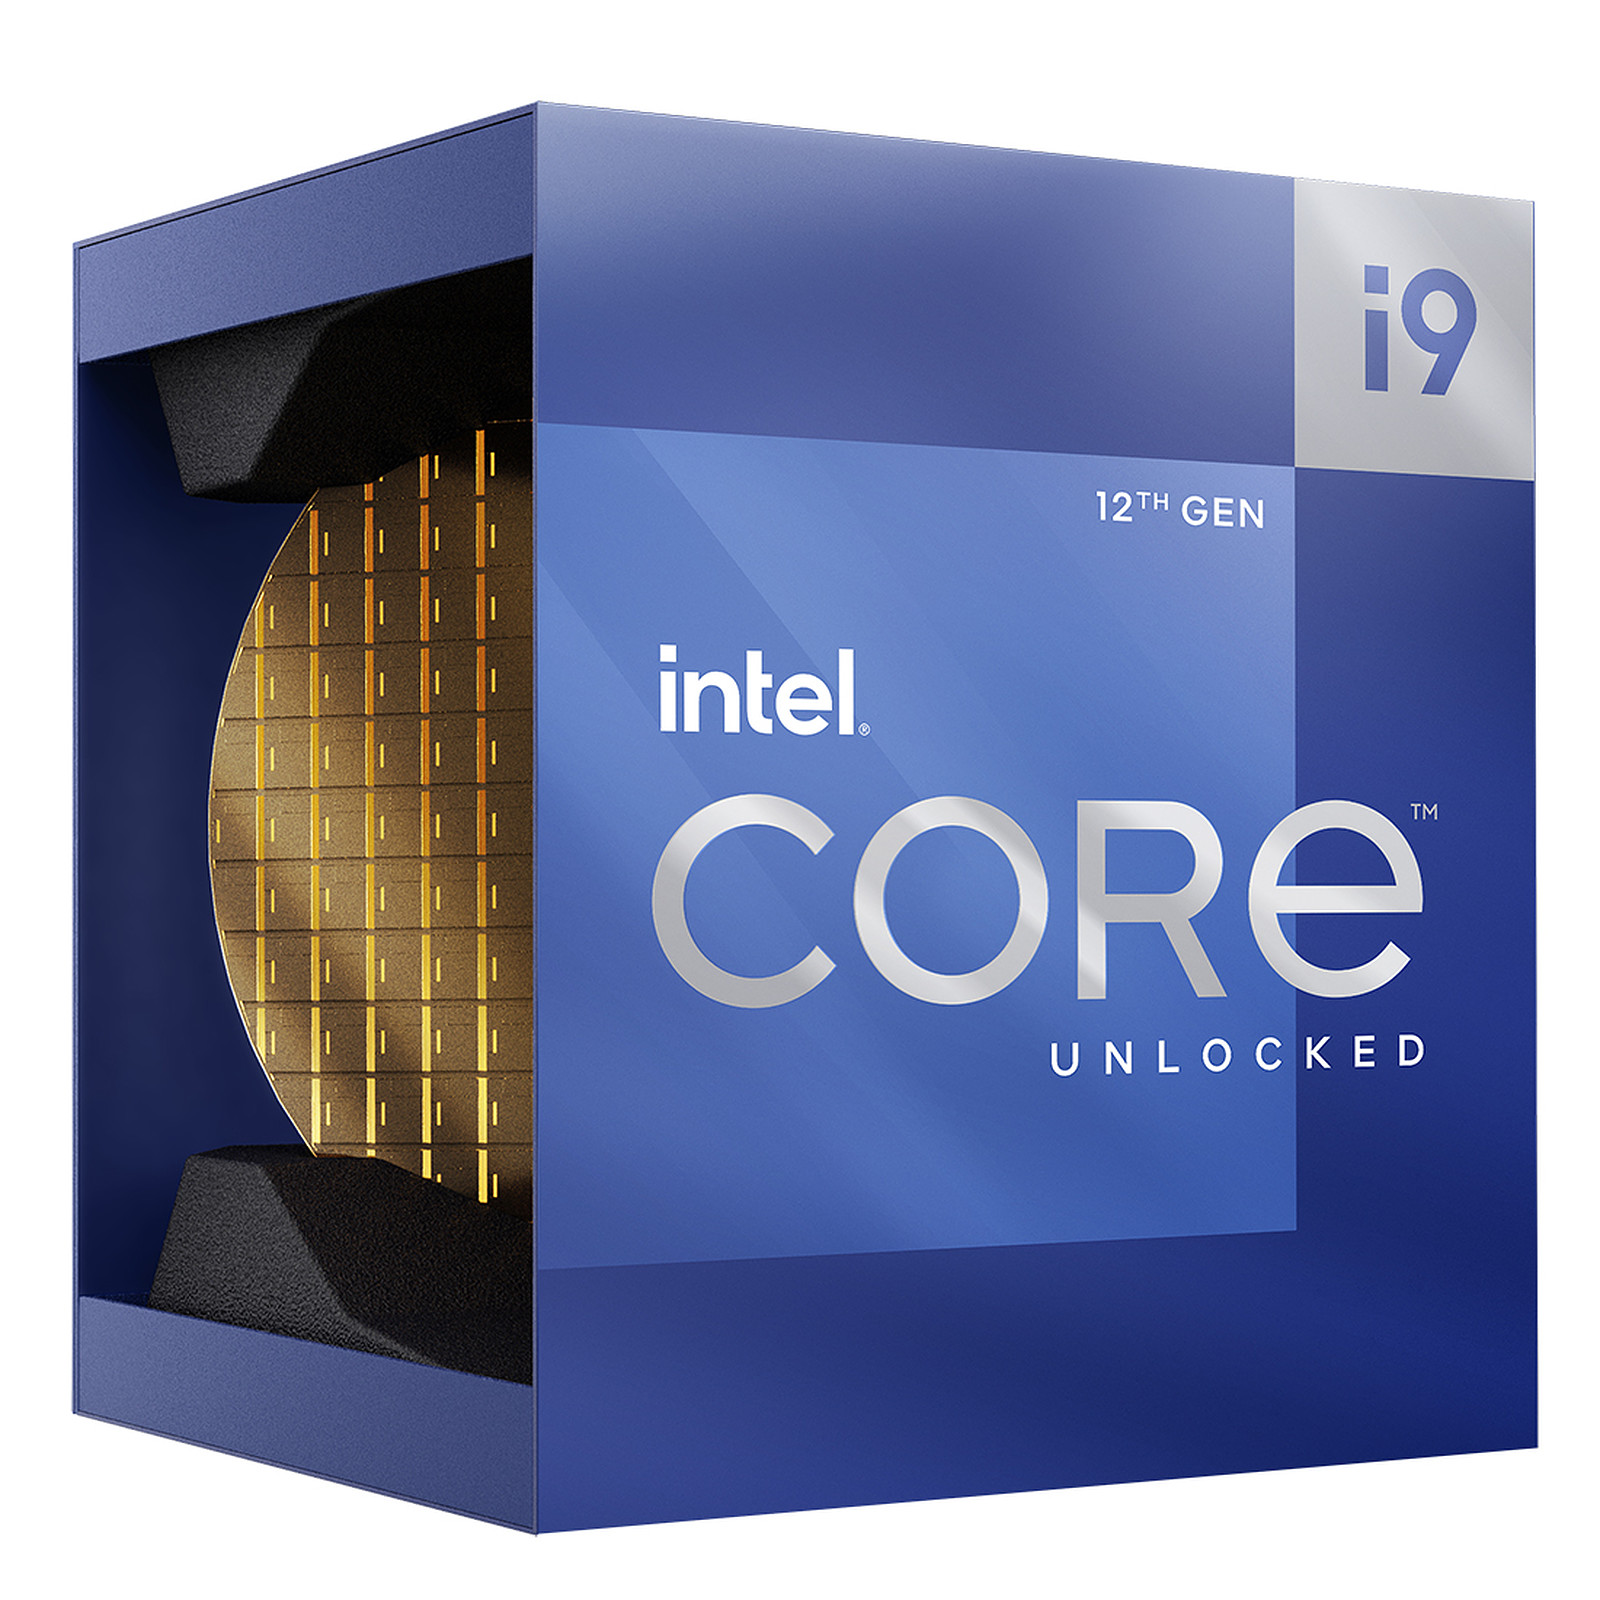 Intel Core i912900K gets 20 discount on Amazon News